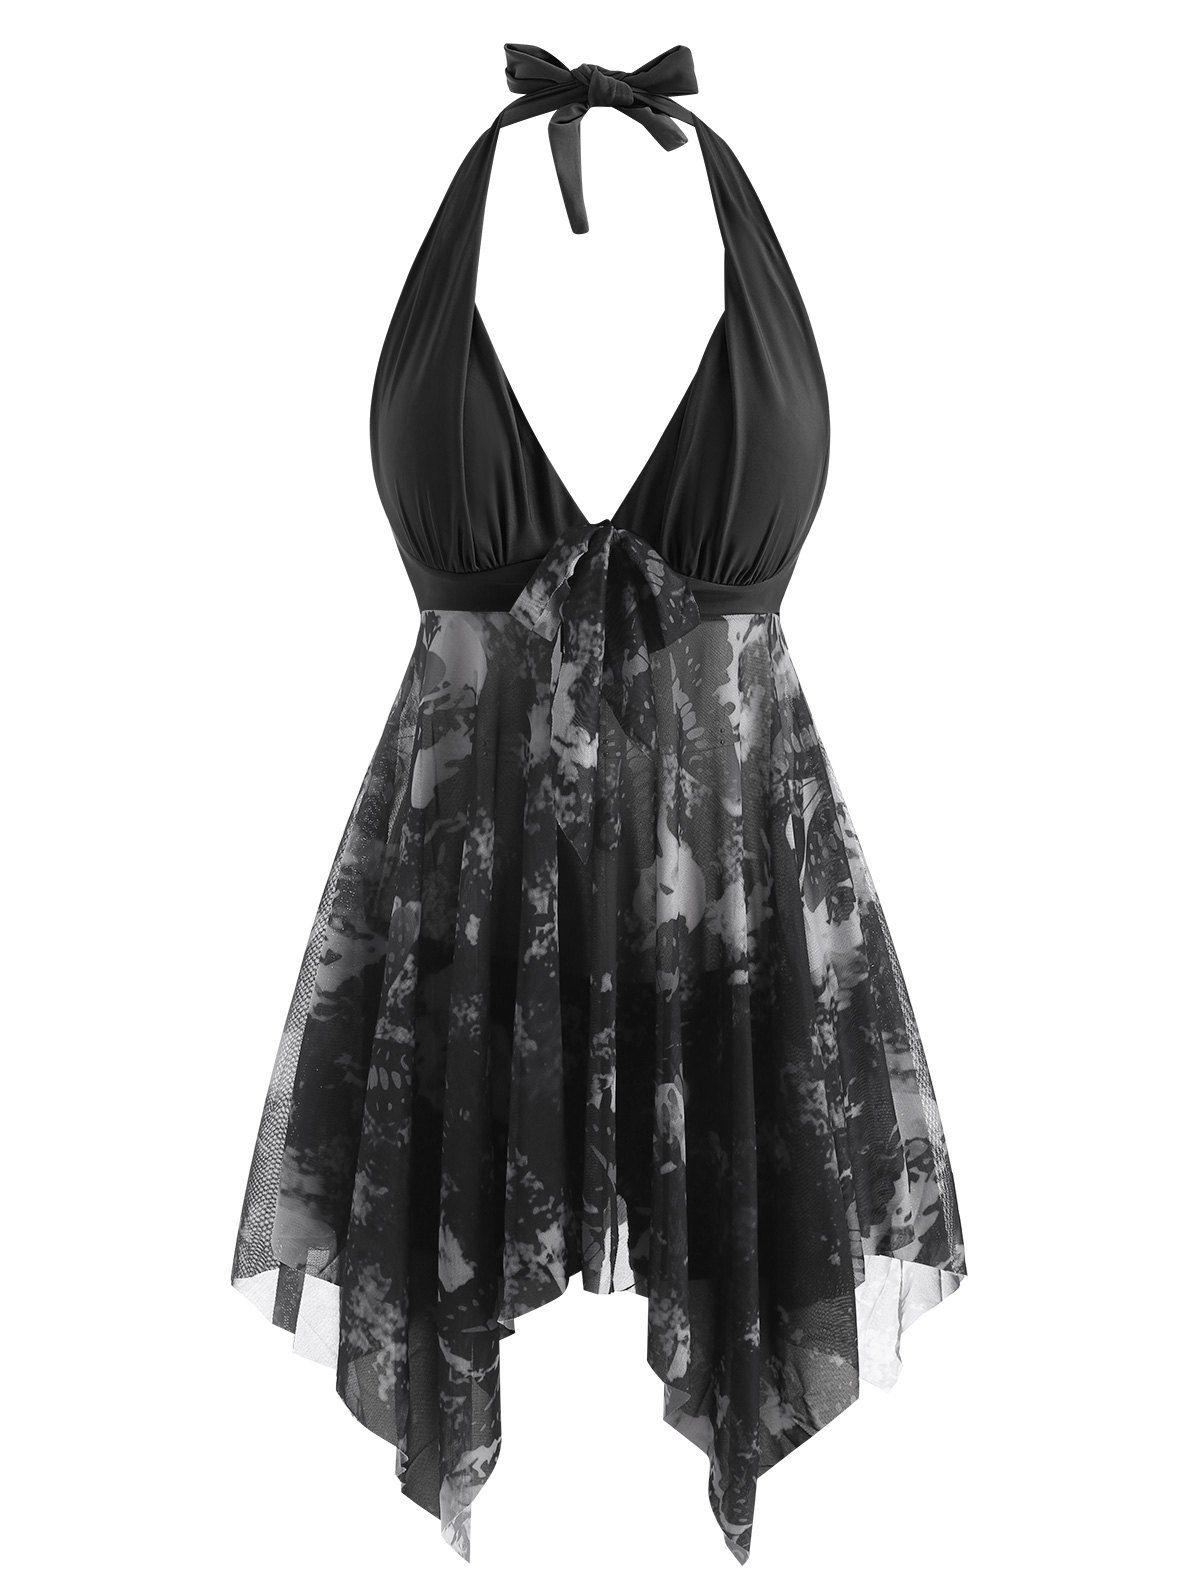 Plus Size Halter Swimsuit Butterfly Print Mesh Insert Bow Tie Handkerchief Tankini Swimwear - BLACK L